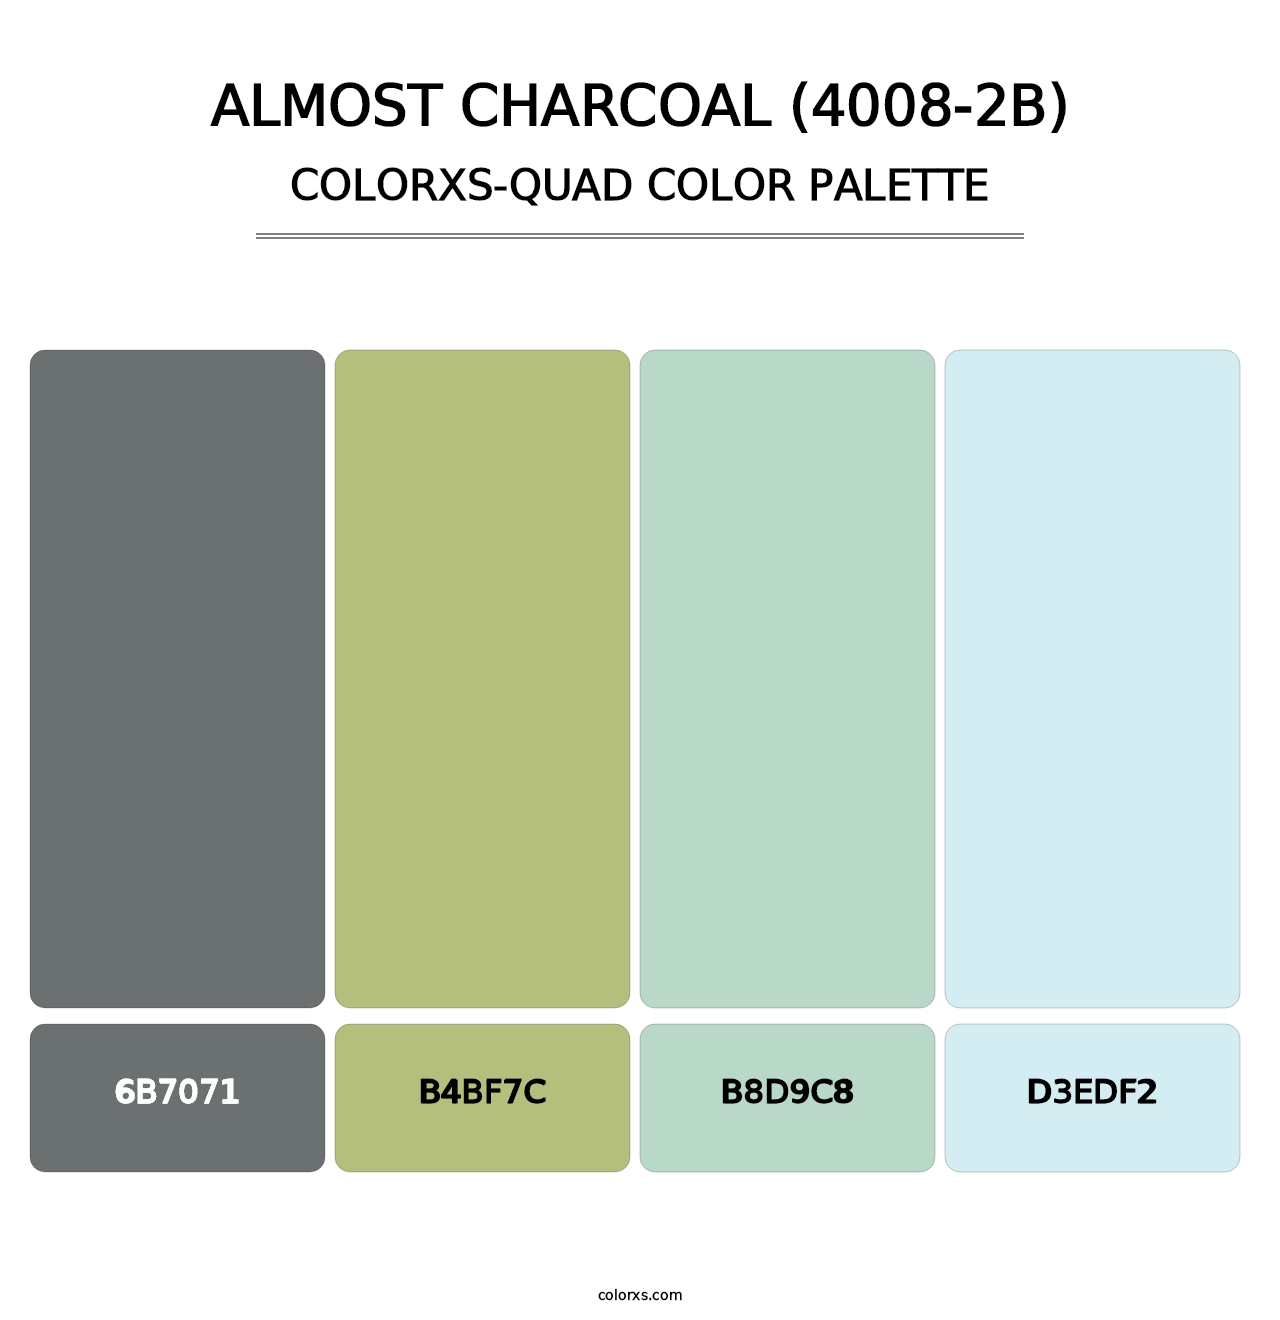 Almost Charcoal (4008-2B) - Colorxs Quad Palette